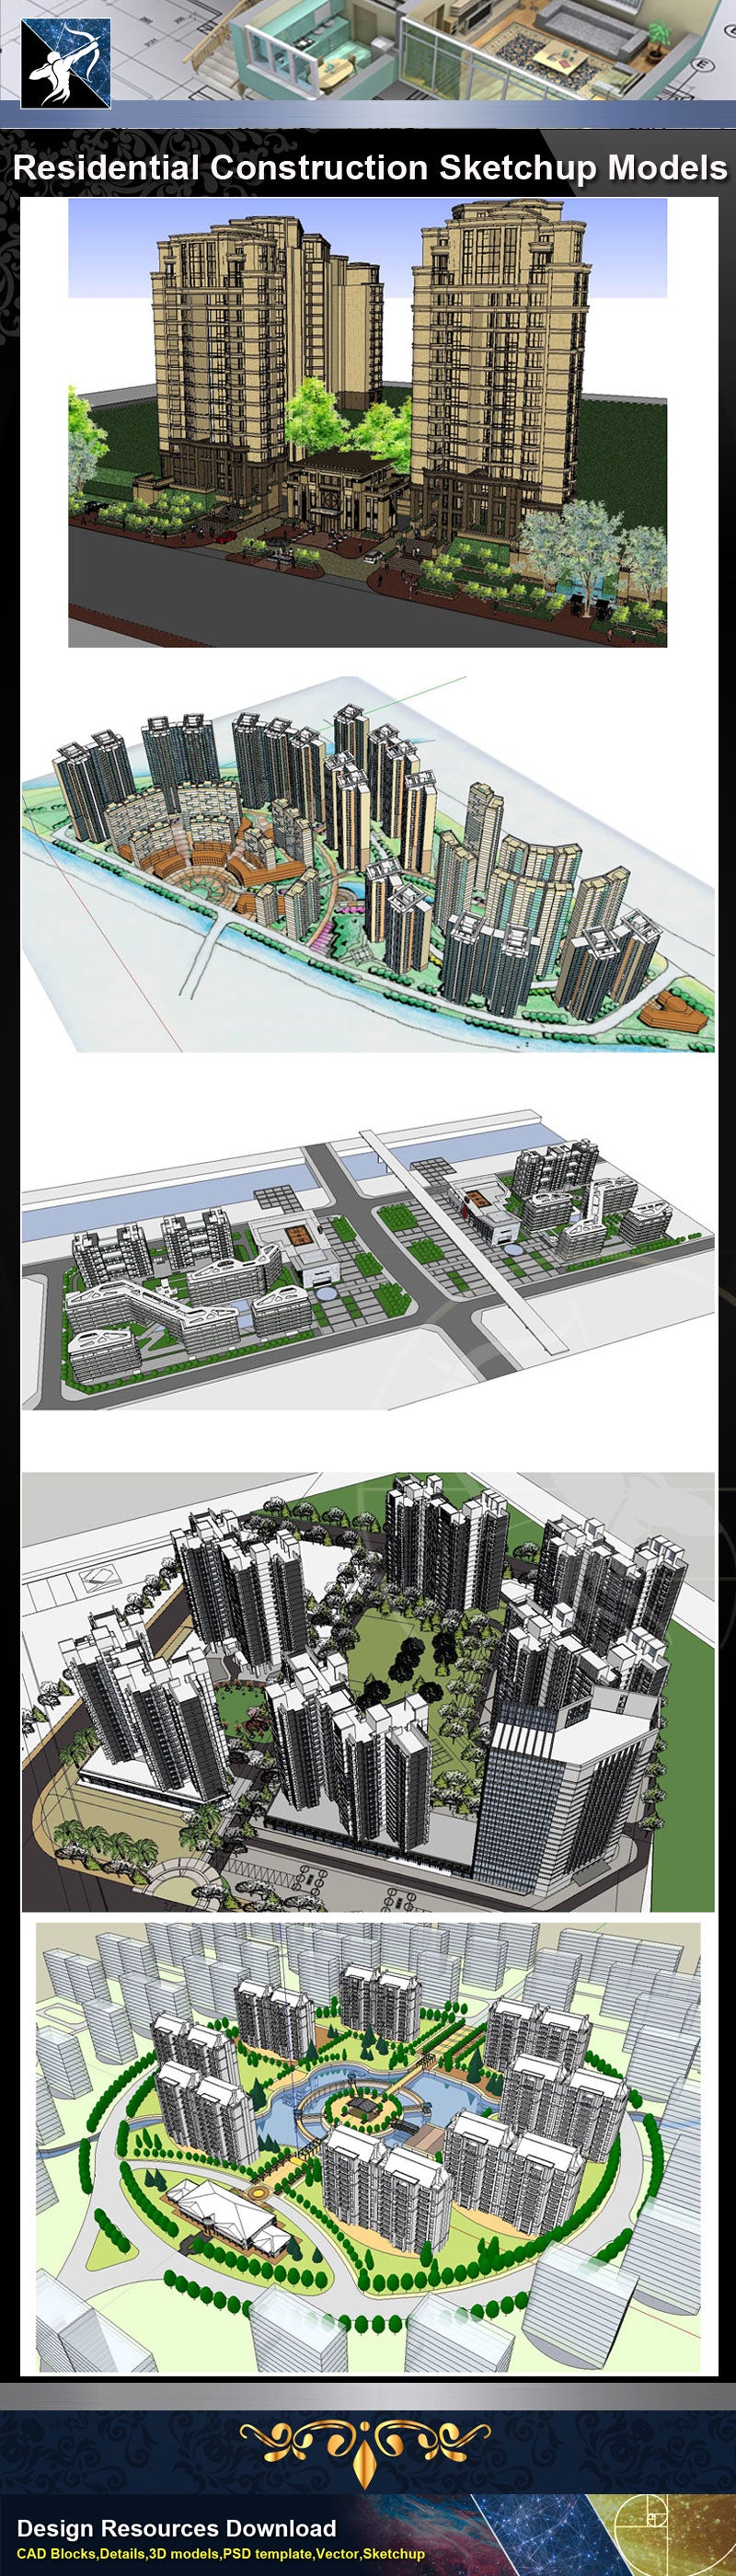 ★Sketchup 3D Models-Residential Construction Sketchup Models